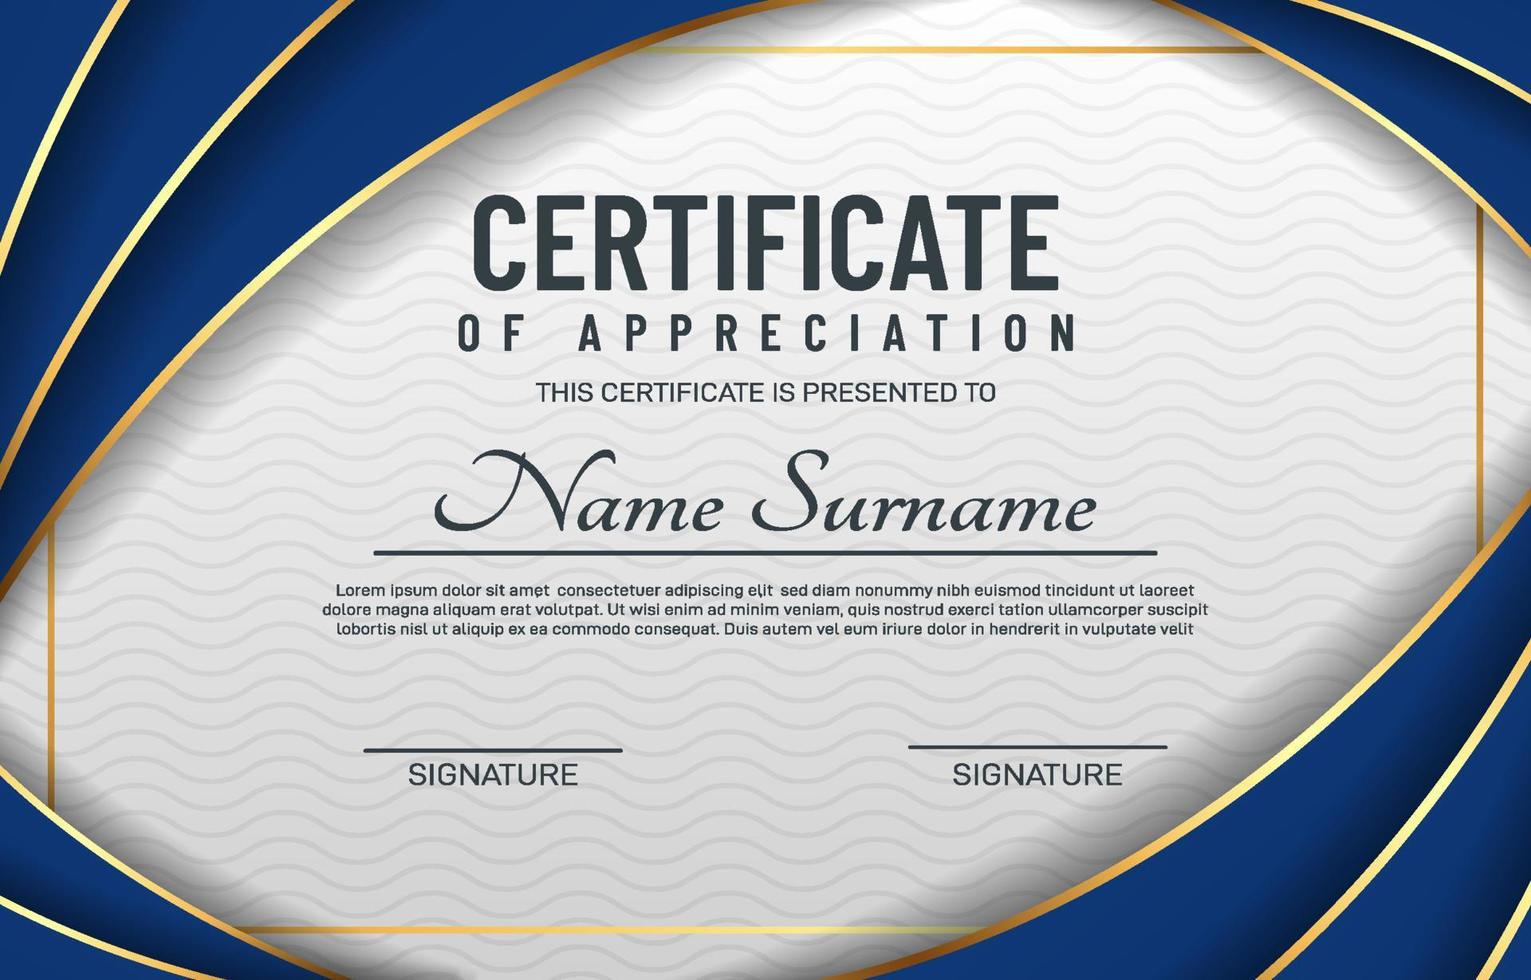 Certificate of Appreciation Background vector